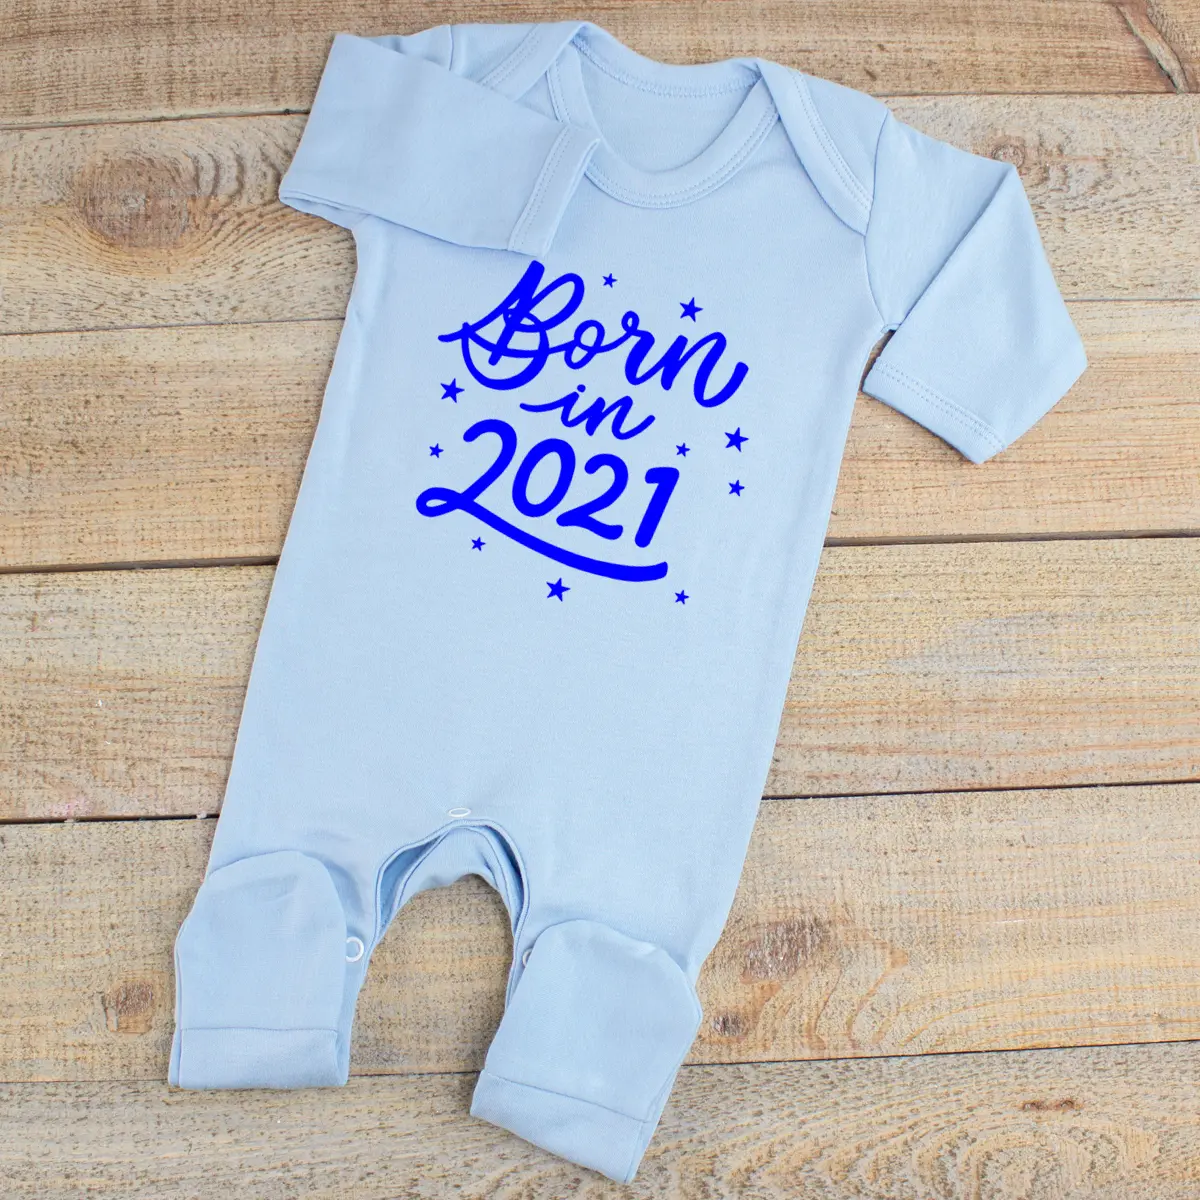 Blue Baby Boy Born in 2021 Clothes